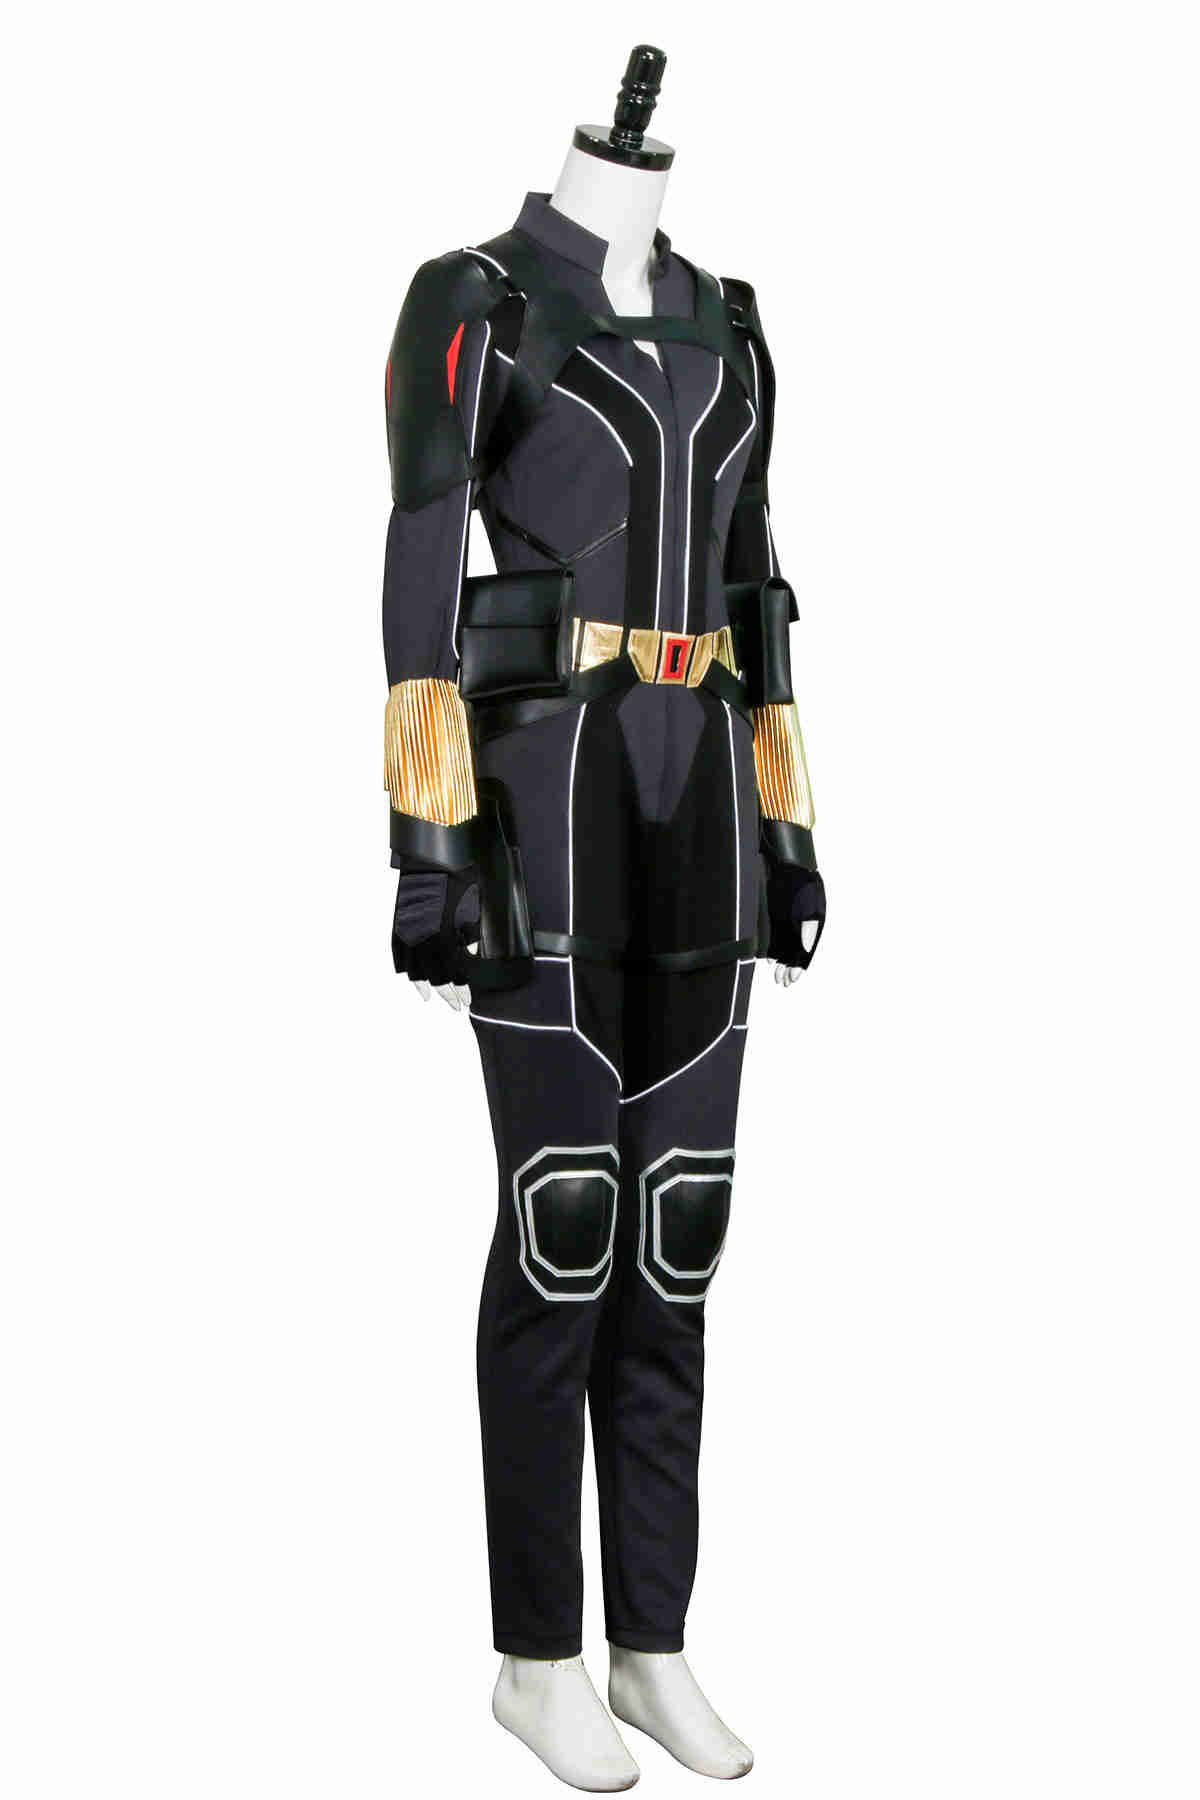 2020 Película Outfit Black Widow Traje Natasha Romanoff Sumpsuit Superheroe Cosplay Costume